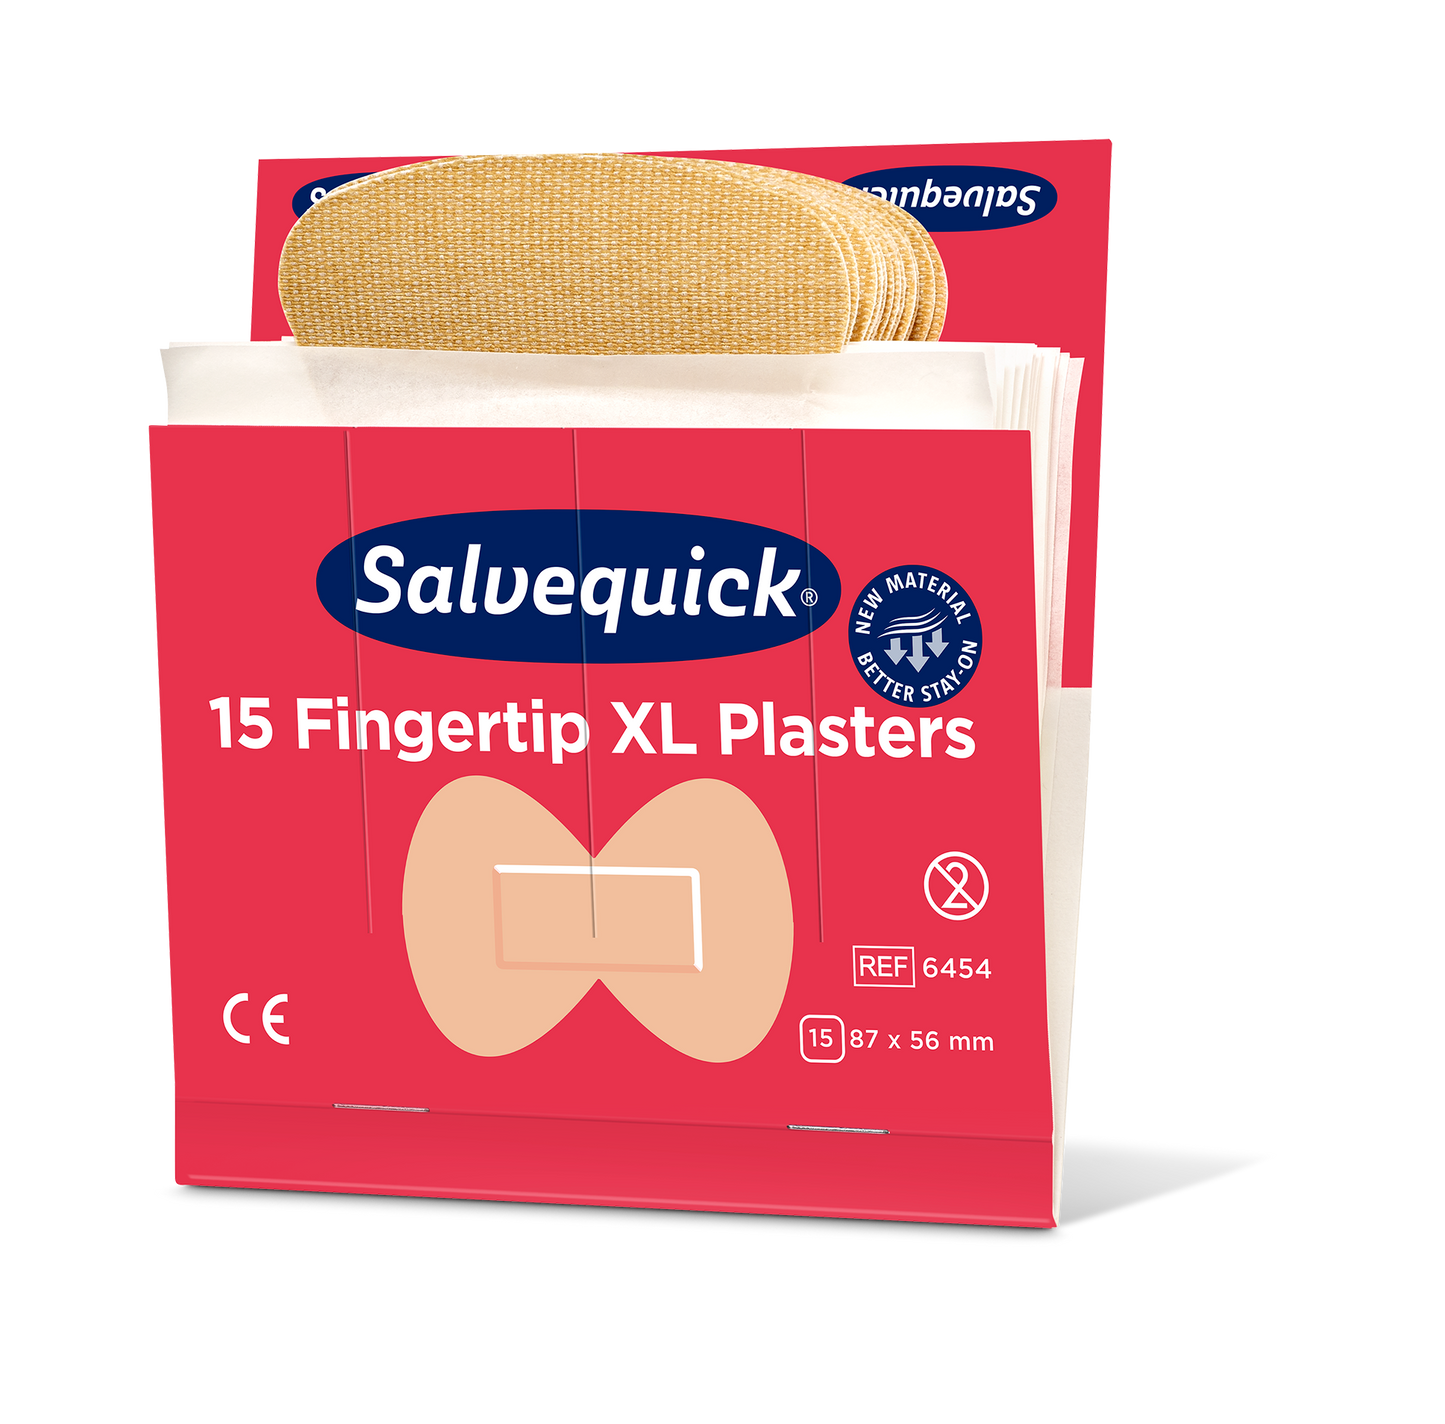 Salvequick Extra Large Fingertip Plasters, 15 per refill, 6 refills per box